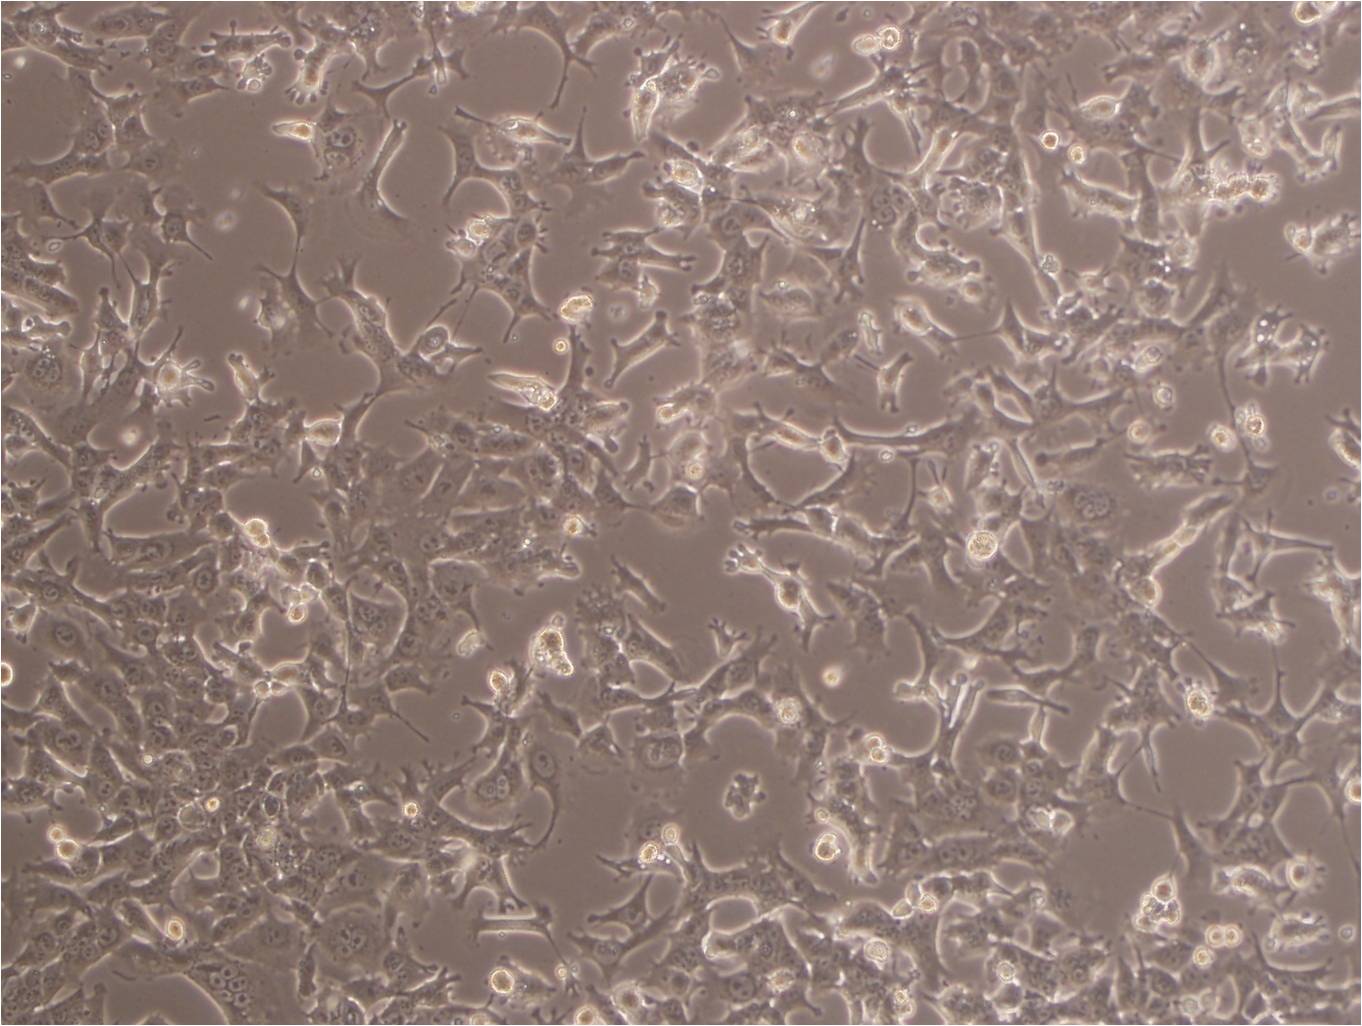 CMT64 epithelioid cells小鼠肺腺癌细胞系